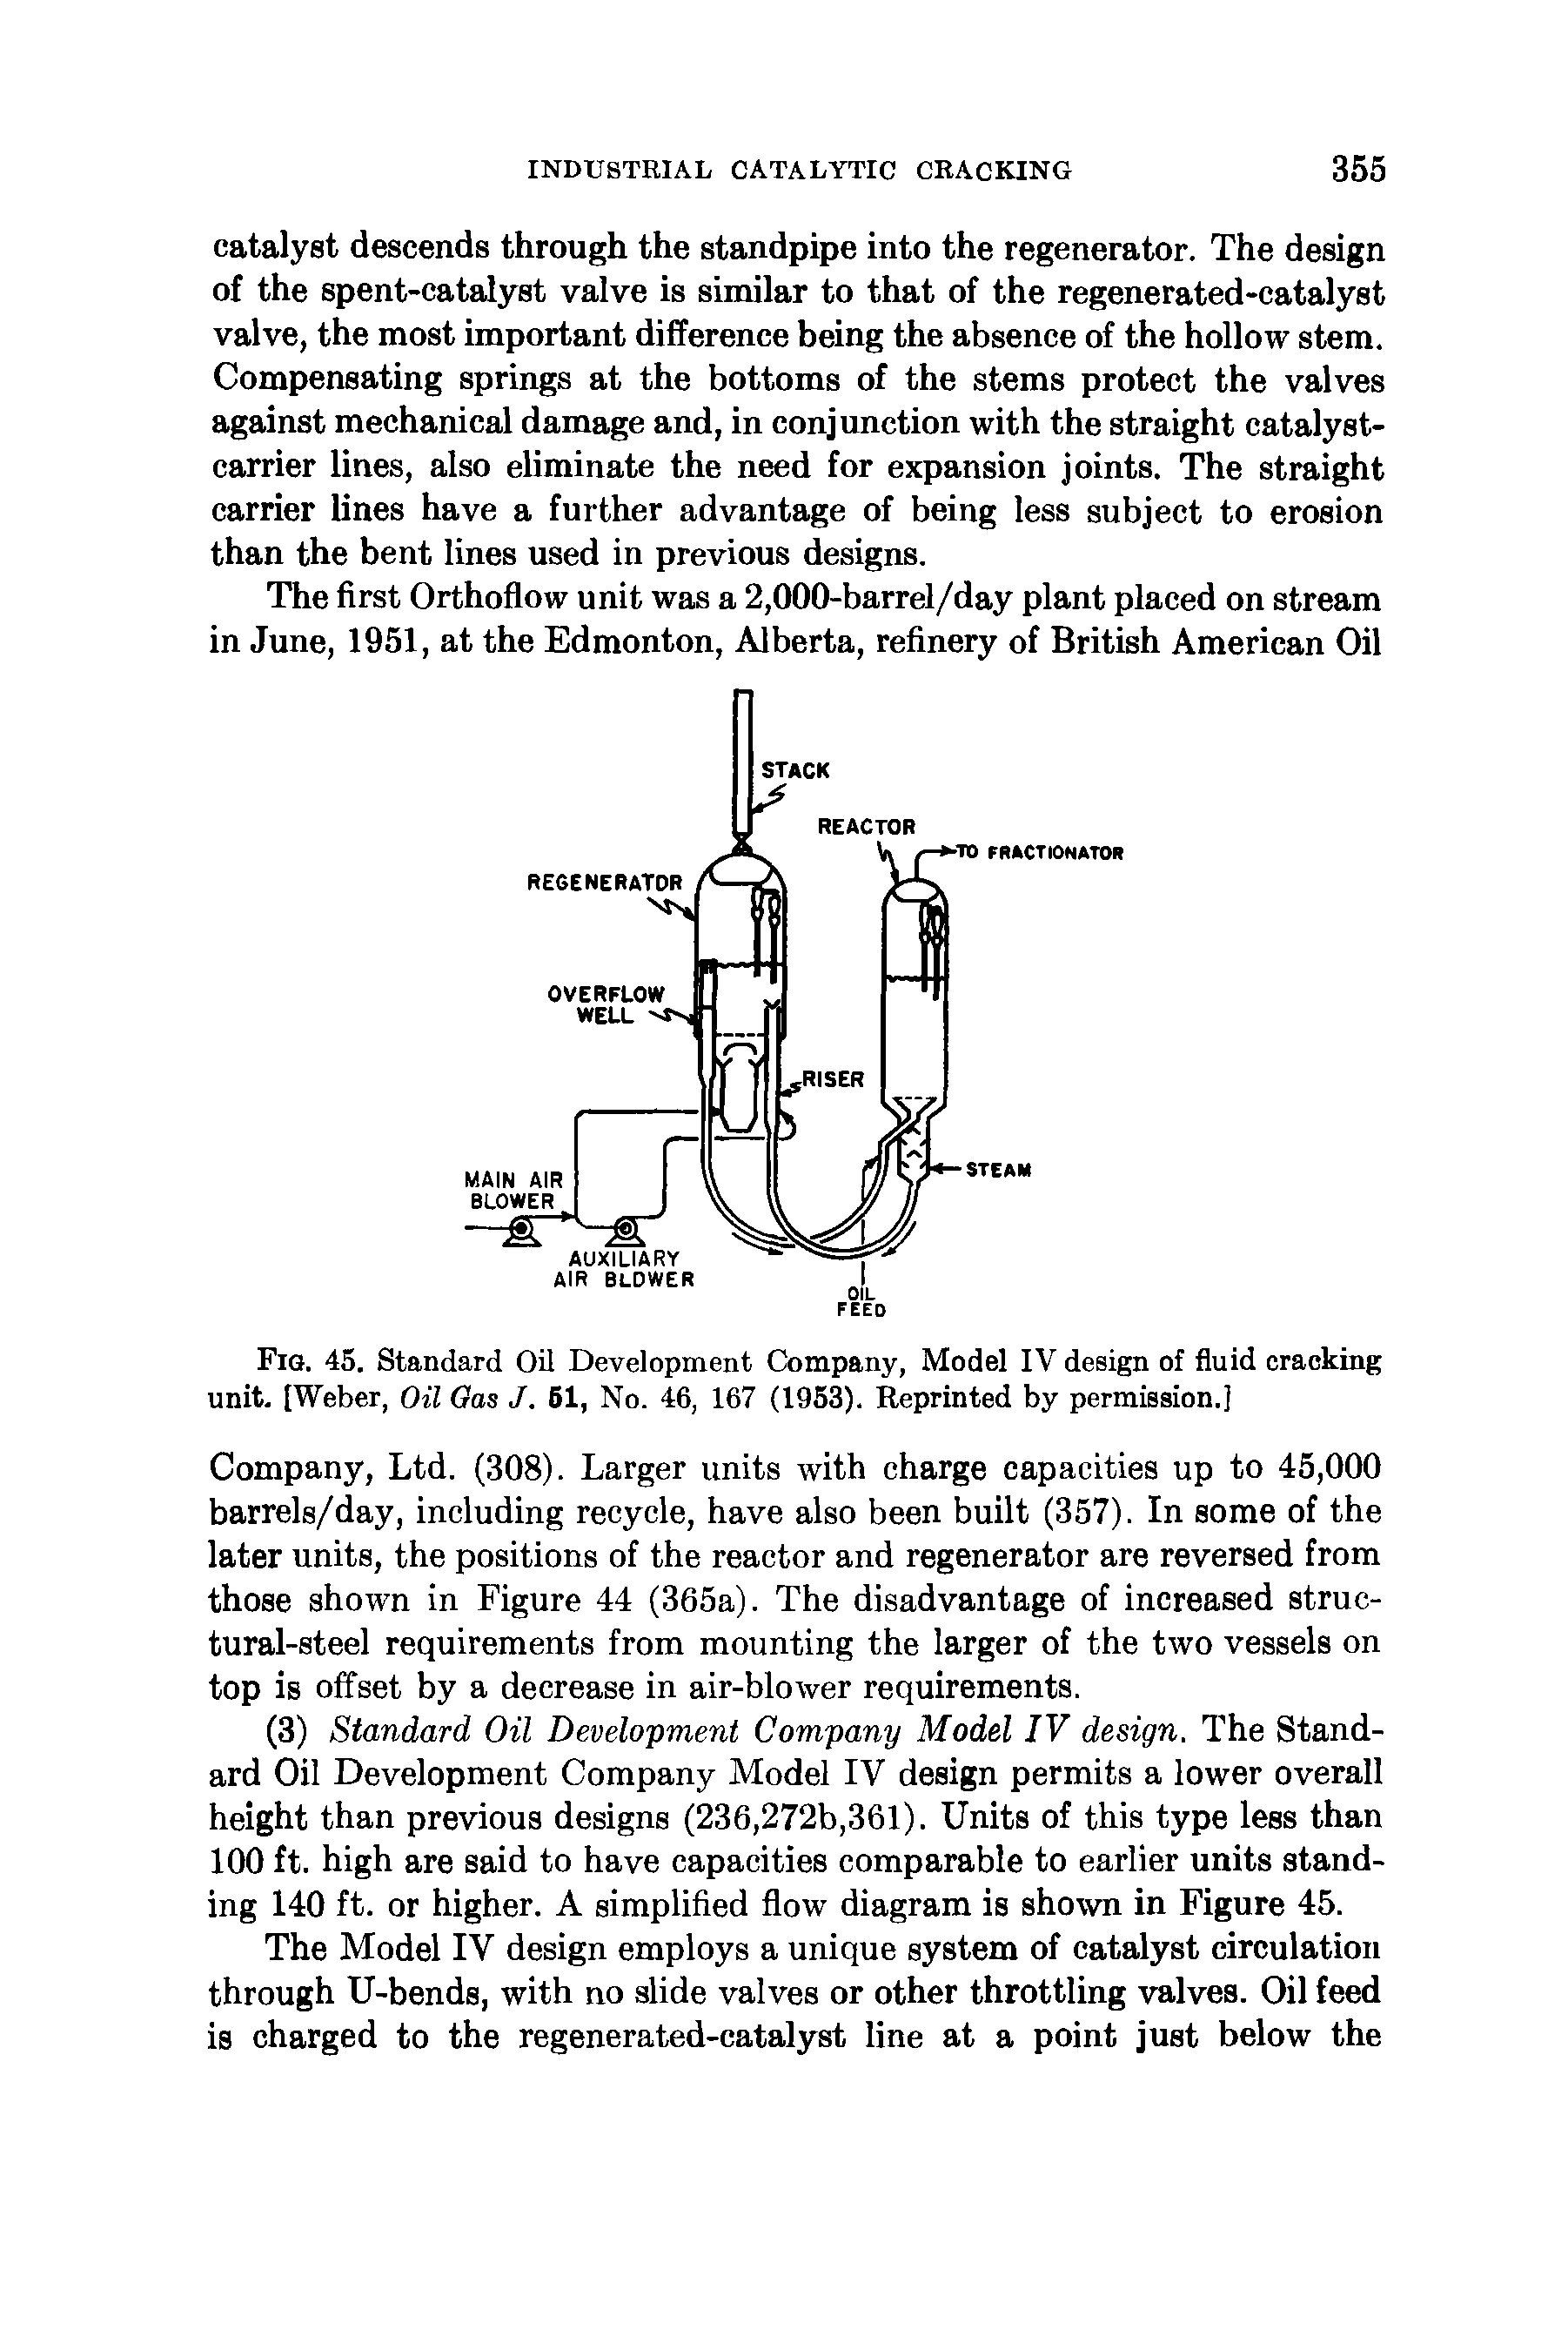 Fig. 45. Standard Oil Development Company, Model IV design of fluid cracking unit. [Weber, Oil Gas J. 61, No. 46, 167 (1953). Reprinted by permission.]...